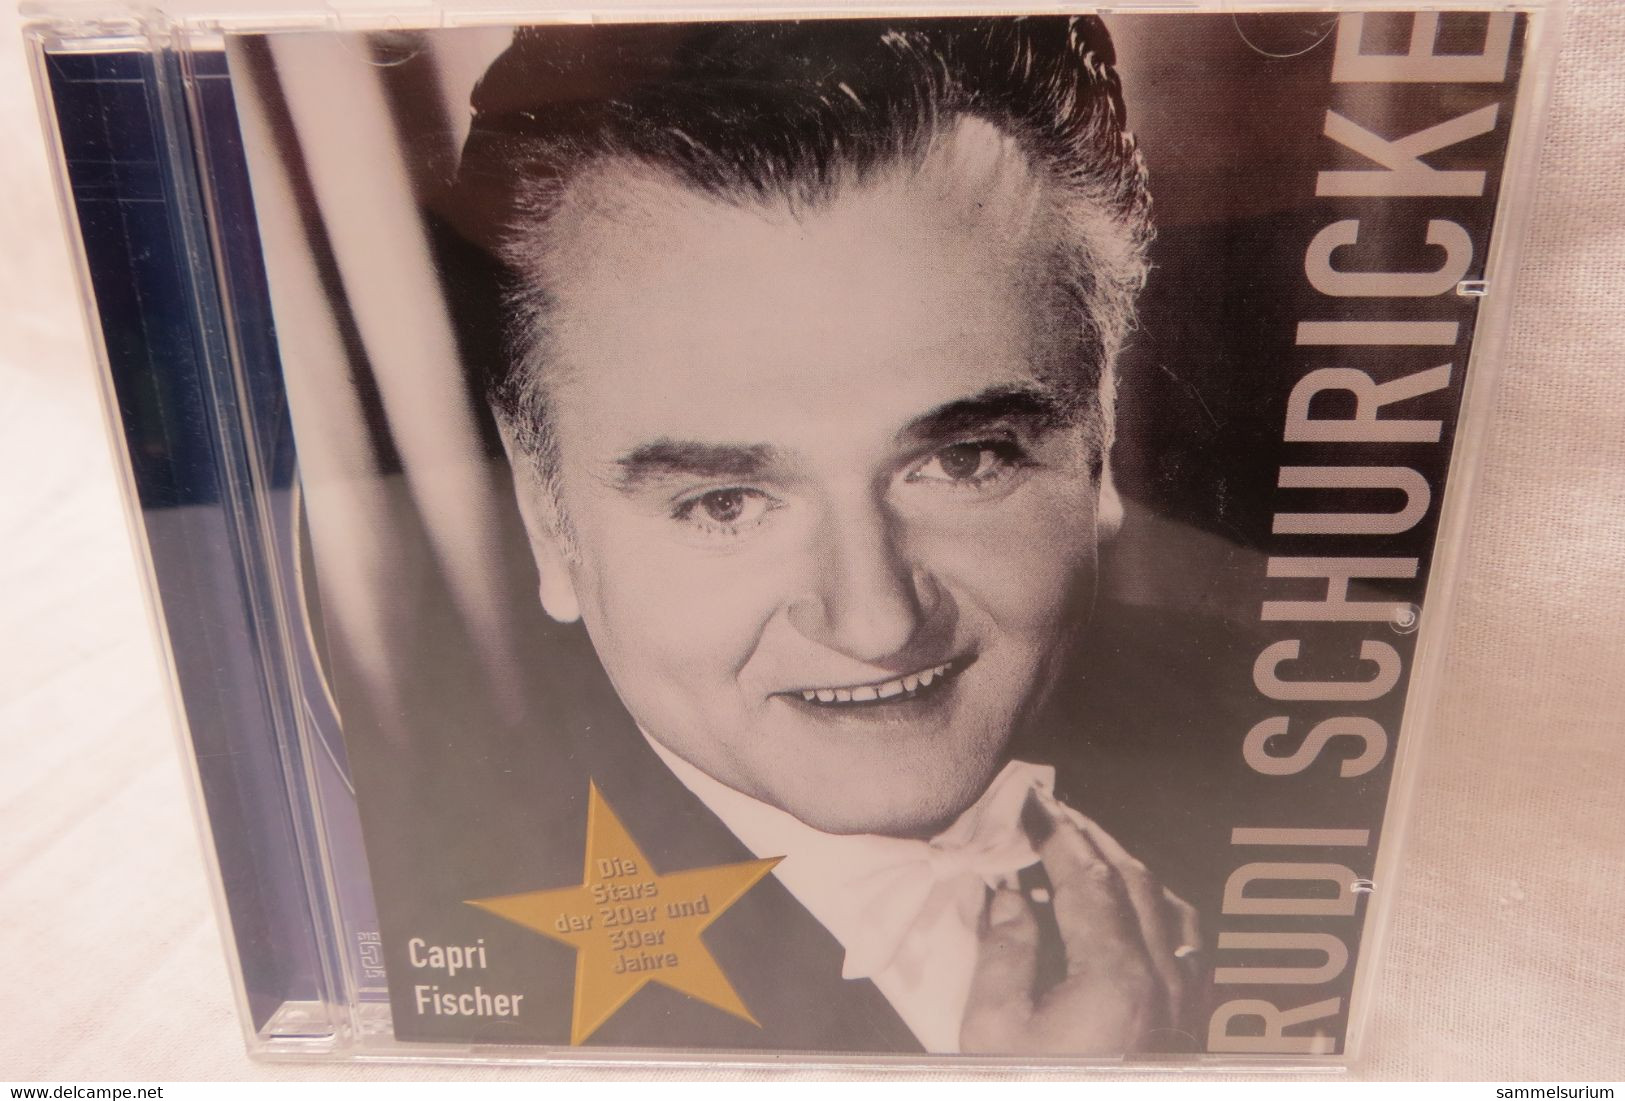 CD "Rudi Schuricke" Capri Fischer - Autres - Musique Allemande